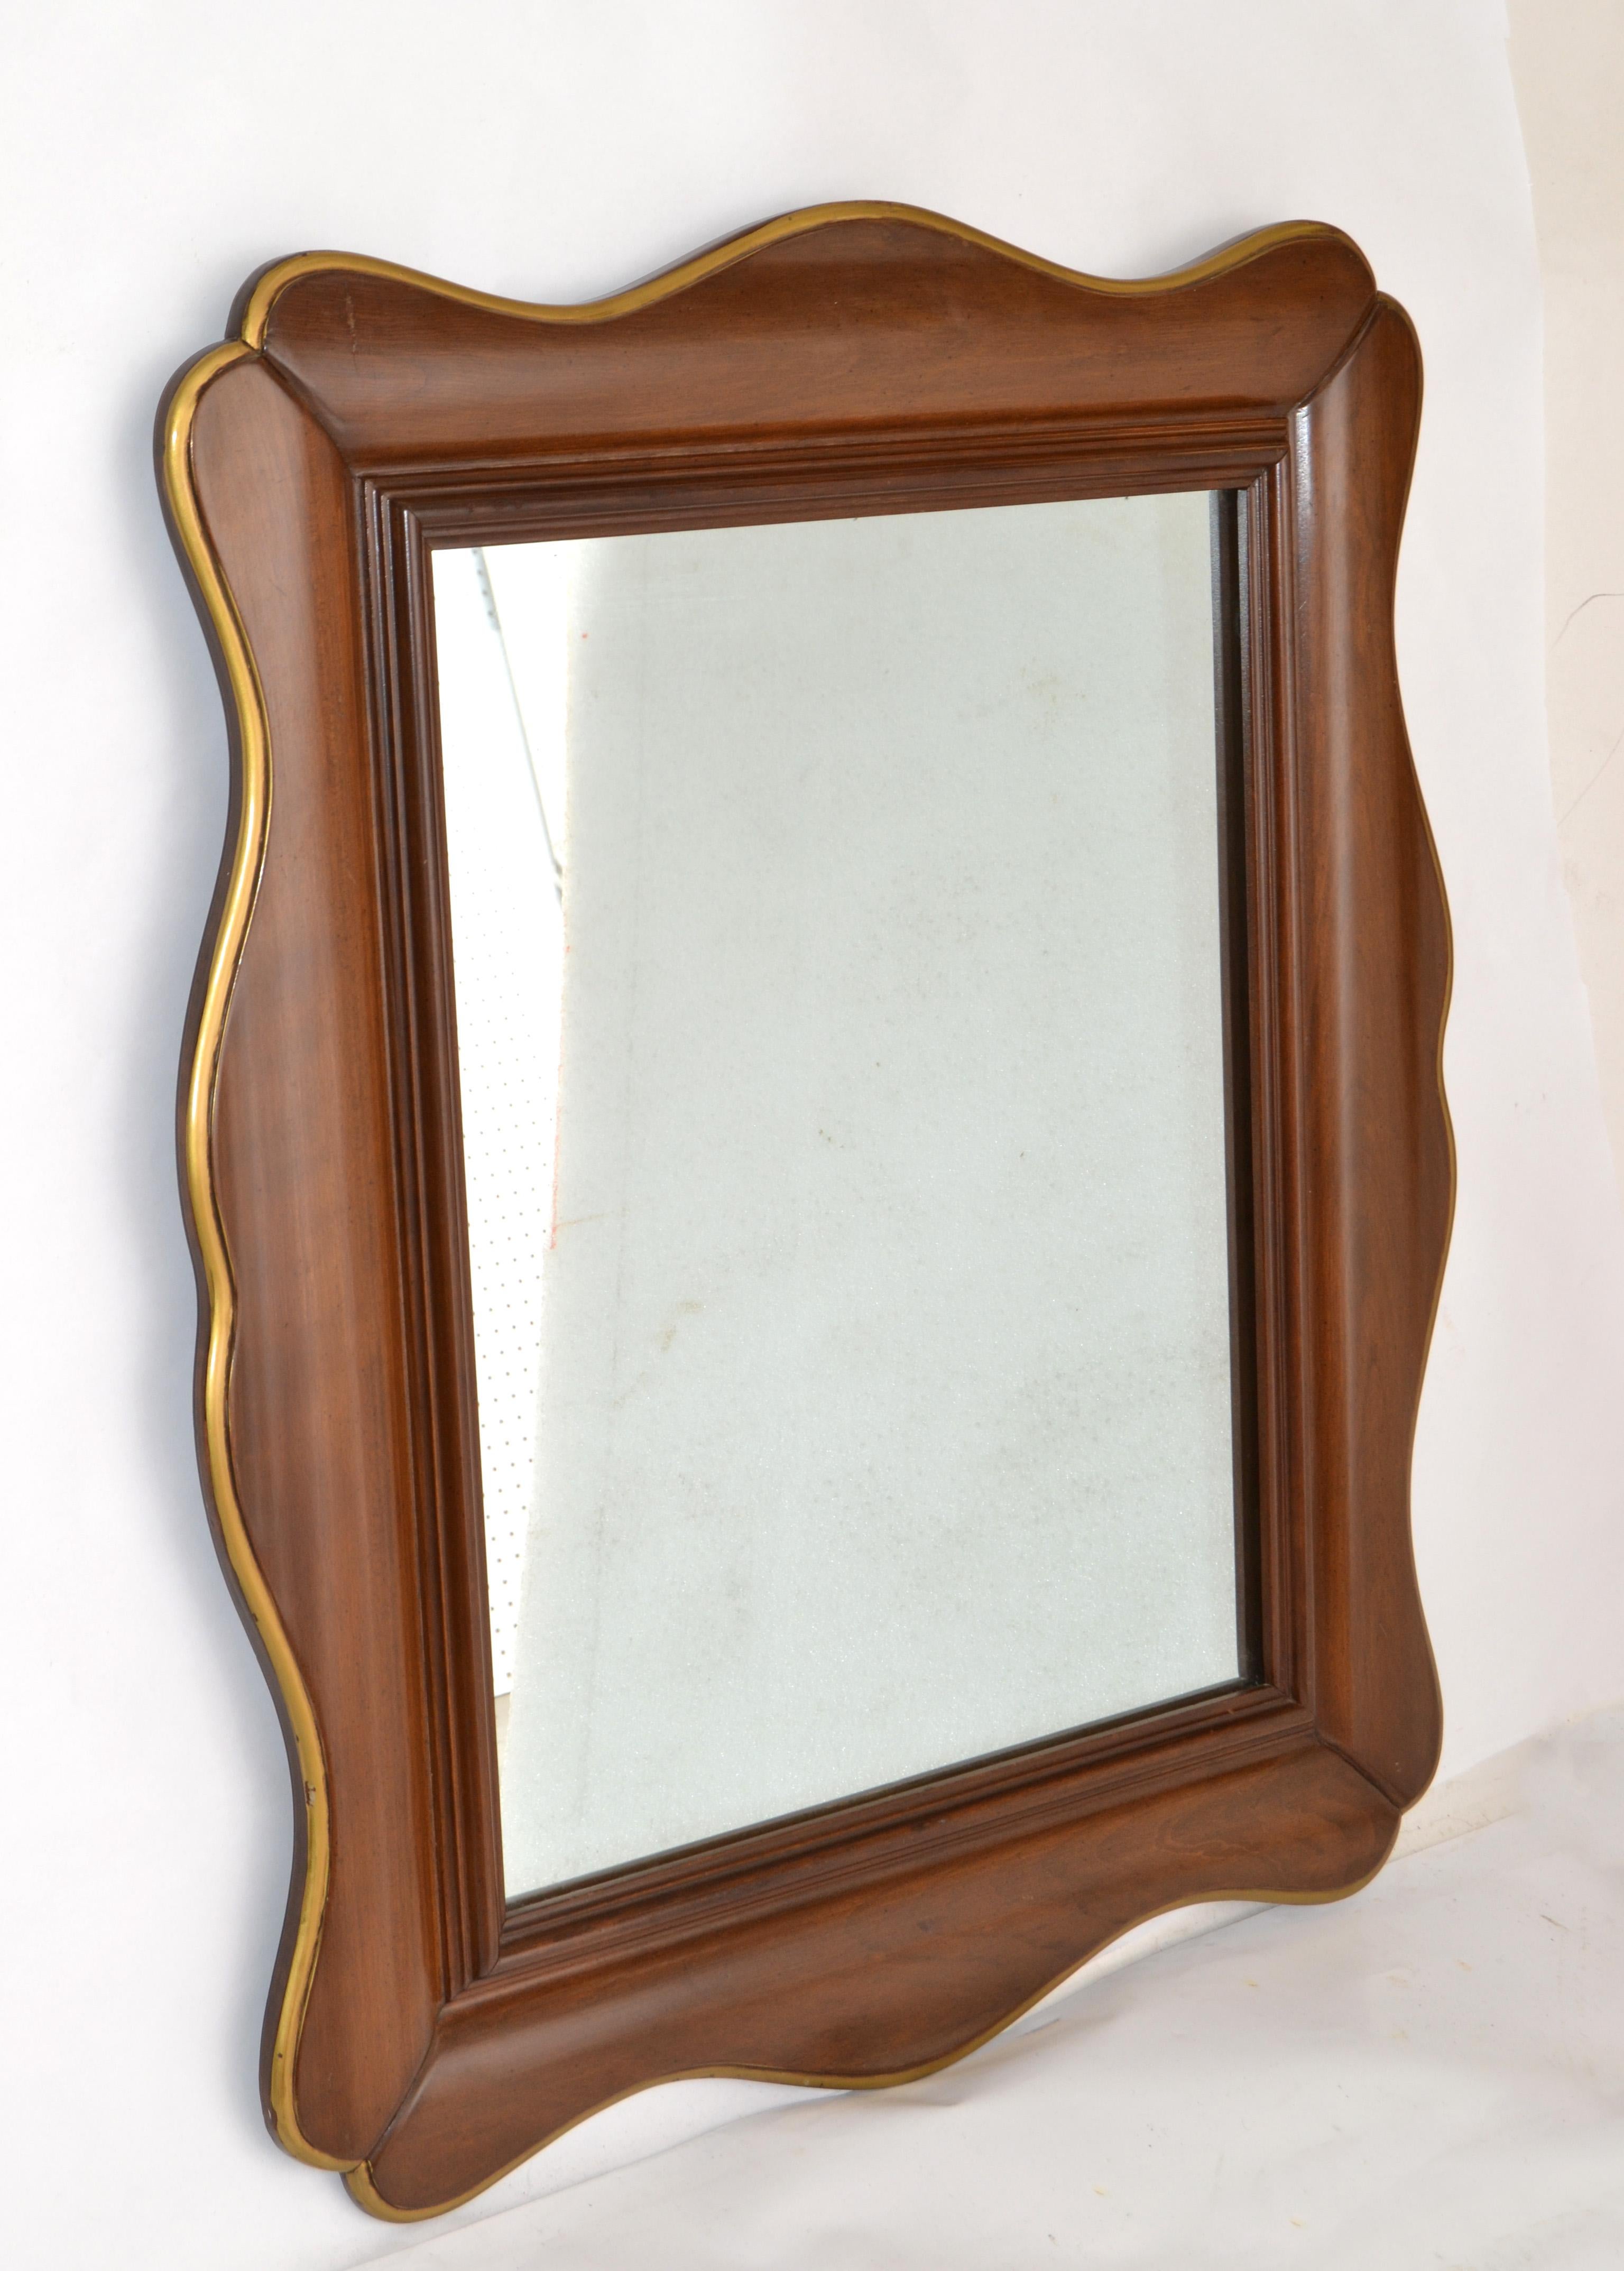 John Widdicomb Walnut & Gilt Accent Scalloped Rectangle Vintage Wall Mirror 70s For Sale 5